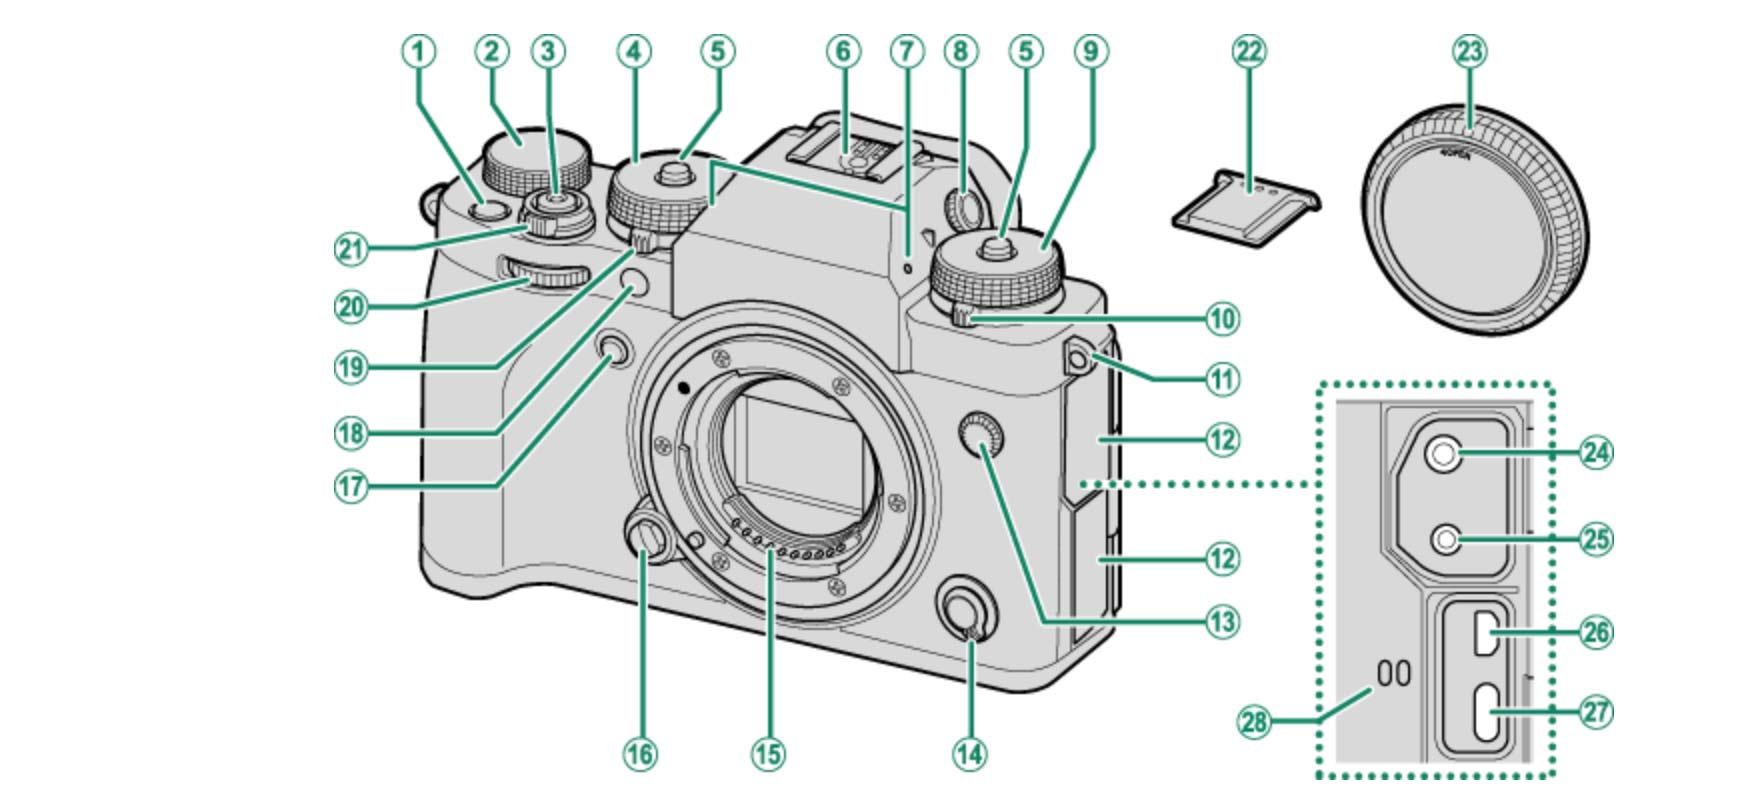 camera control diagram